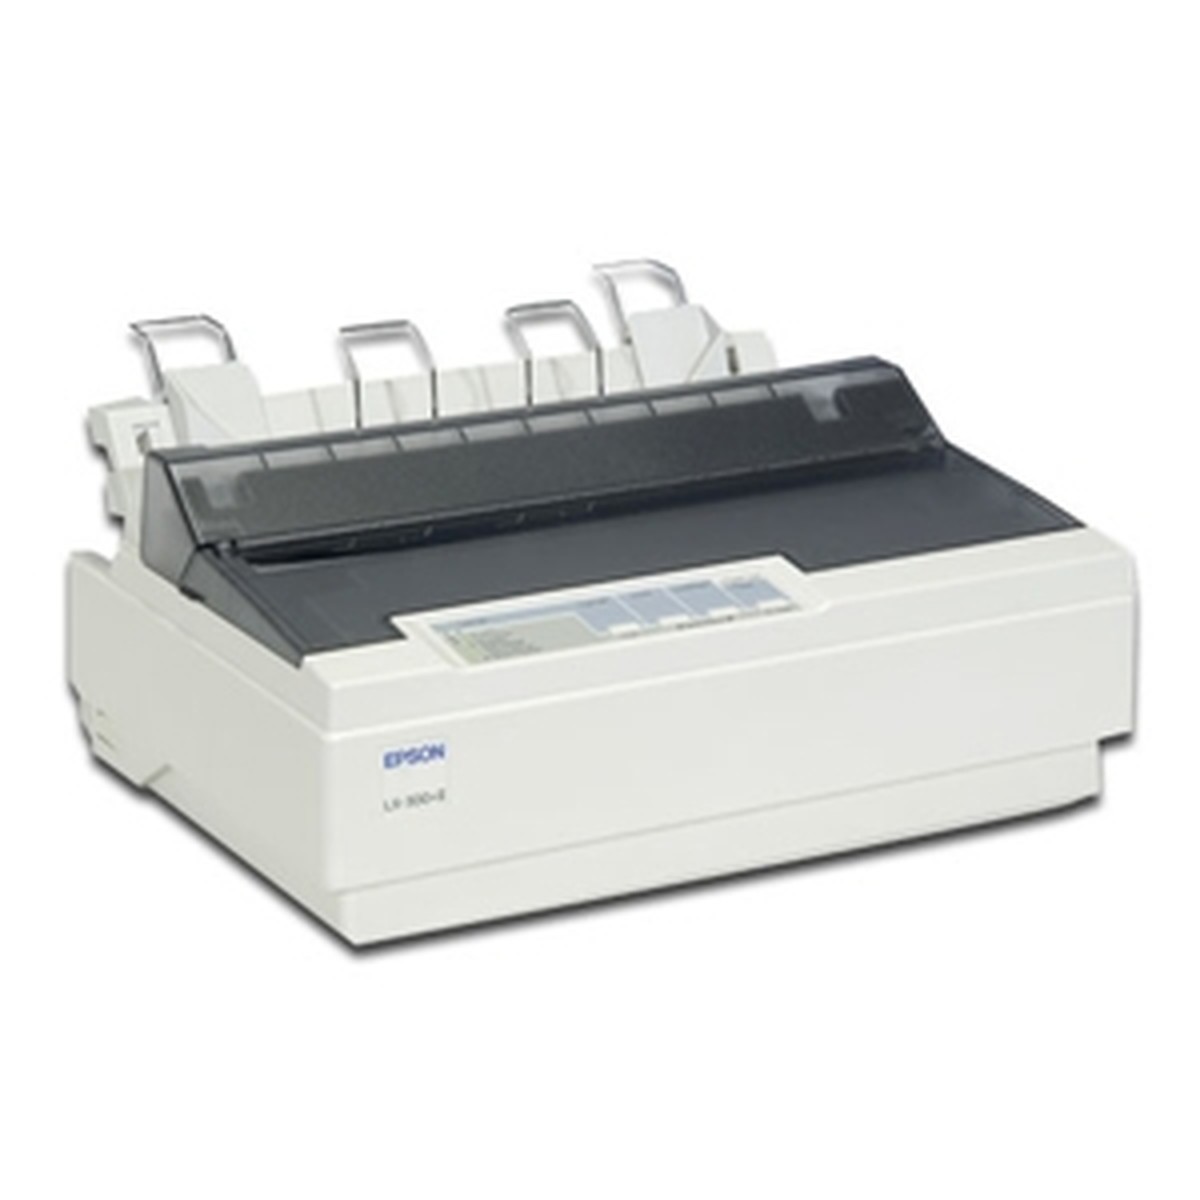 Матричный принтер epson lx. Epson LX-300+II. Принтер матричный Epson LX-300. Canon lx300. Epson LX-300+II цветной.